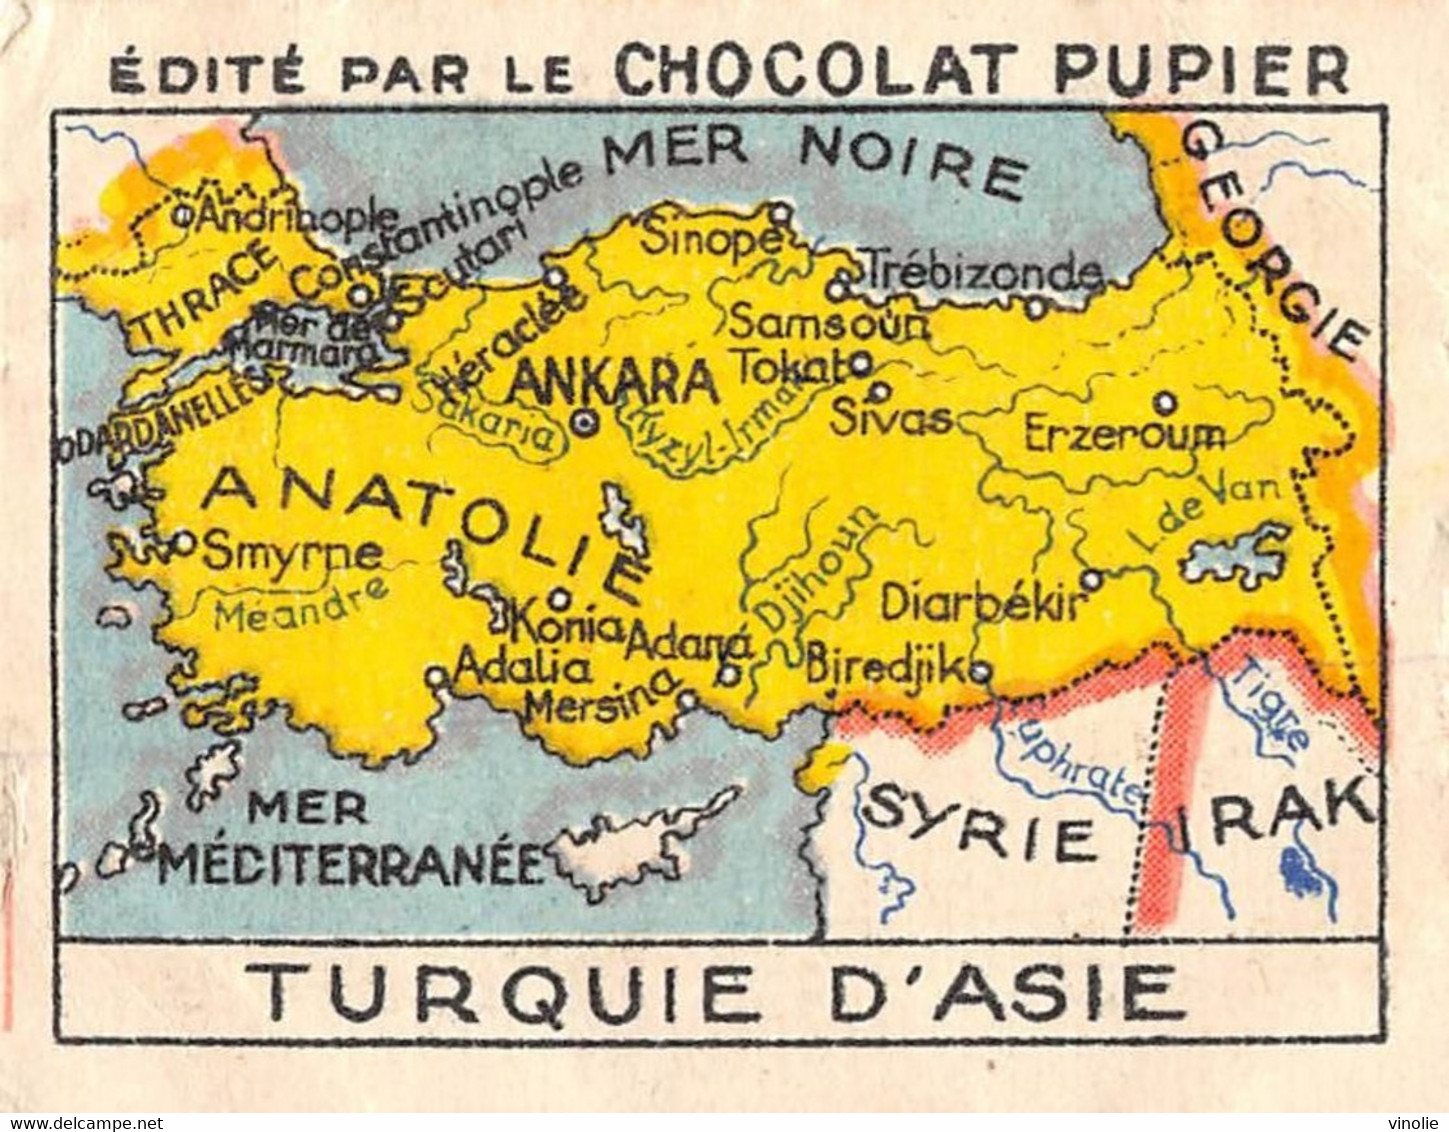 PIE-FO-21-3525 : EDITION DU CHOCOLAT PUPIER. TURQUIE D'ASIE. CARTE GEOGRAPHIQUE. ANATOLIE - Turquie